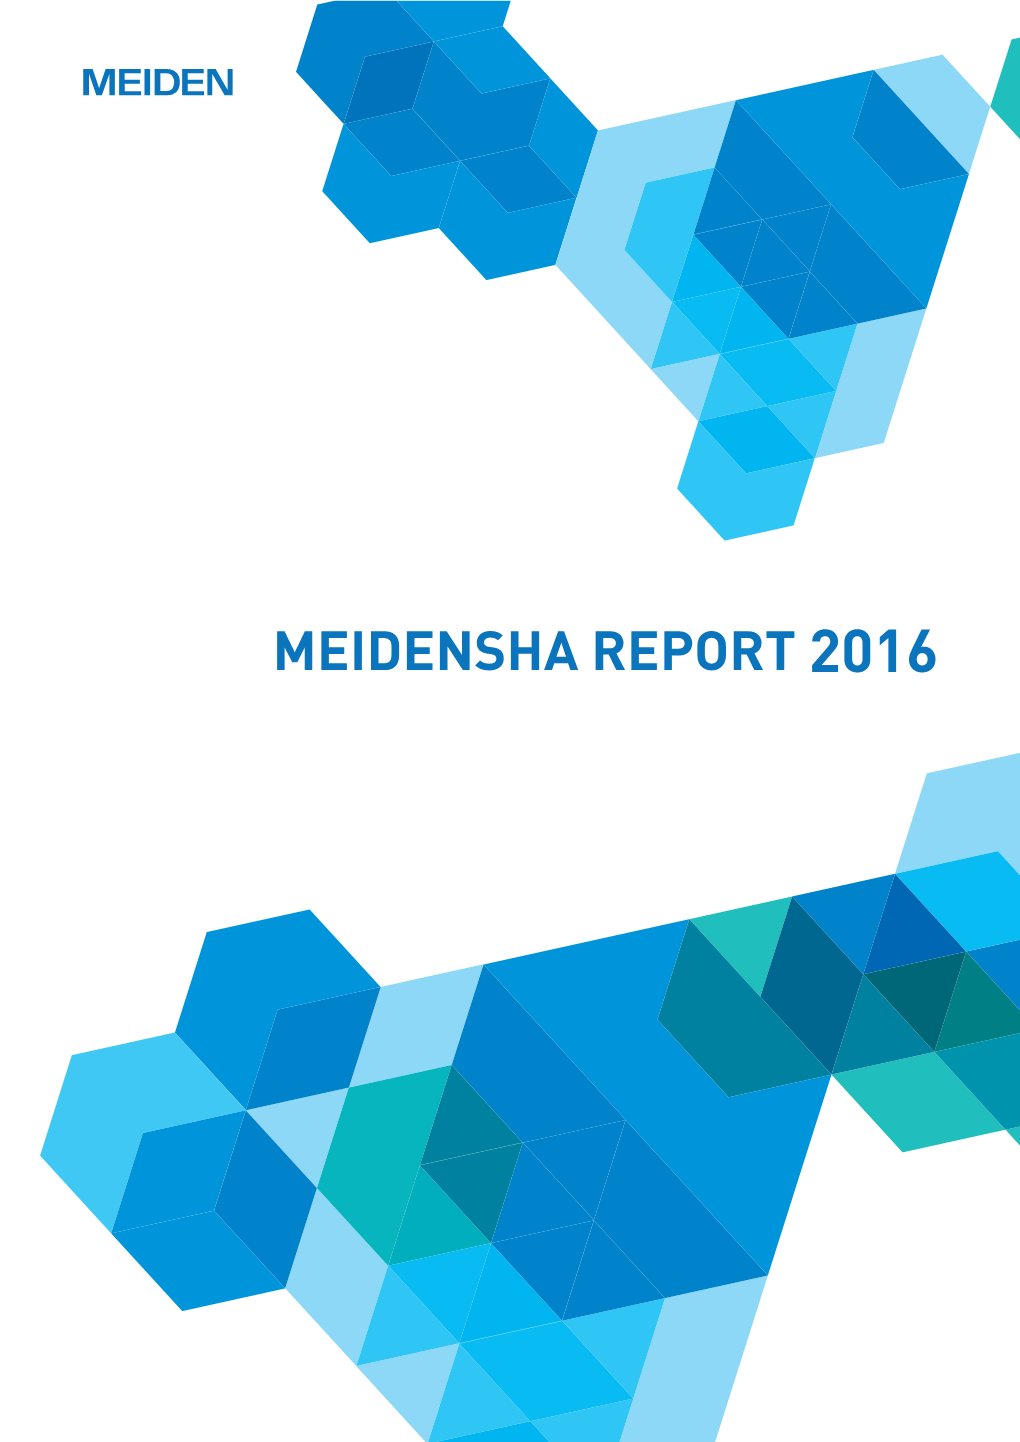 Meidensha Report 2016